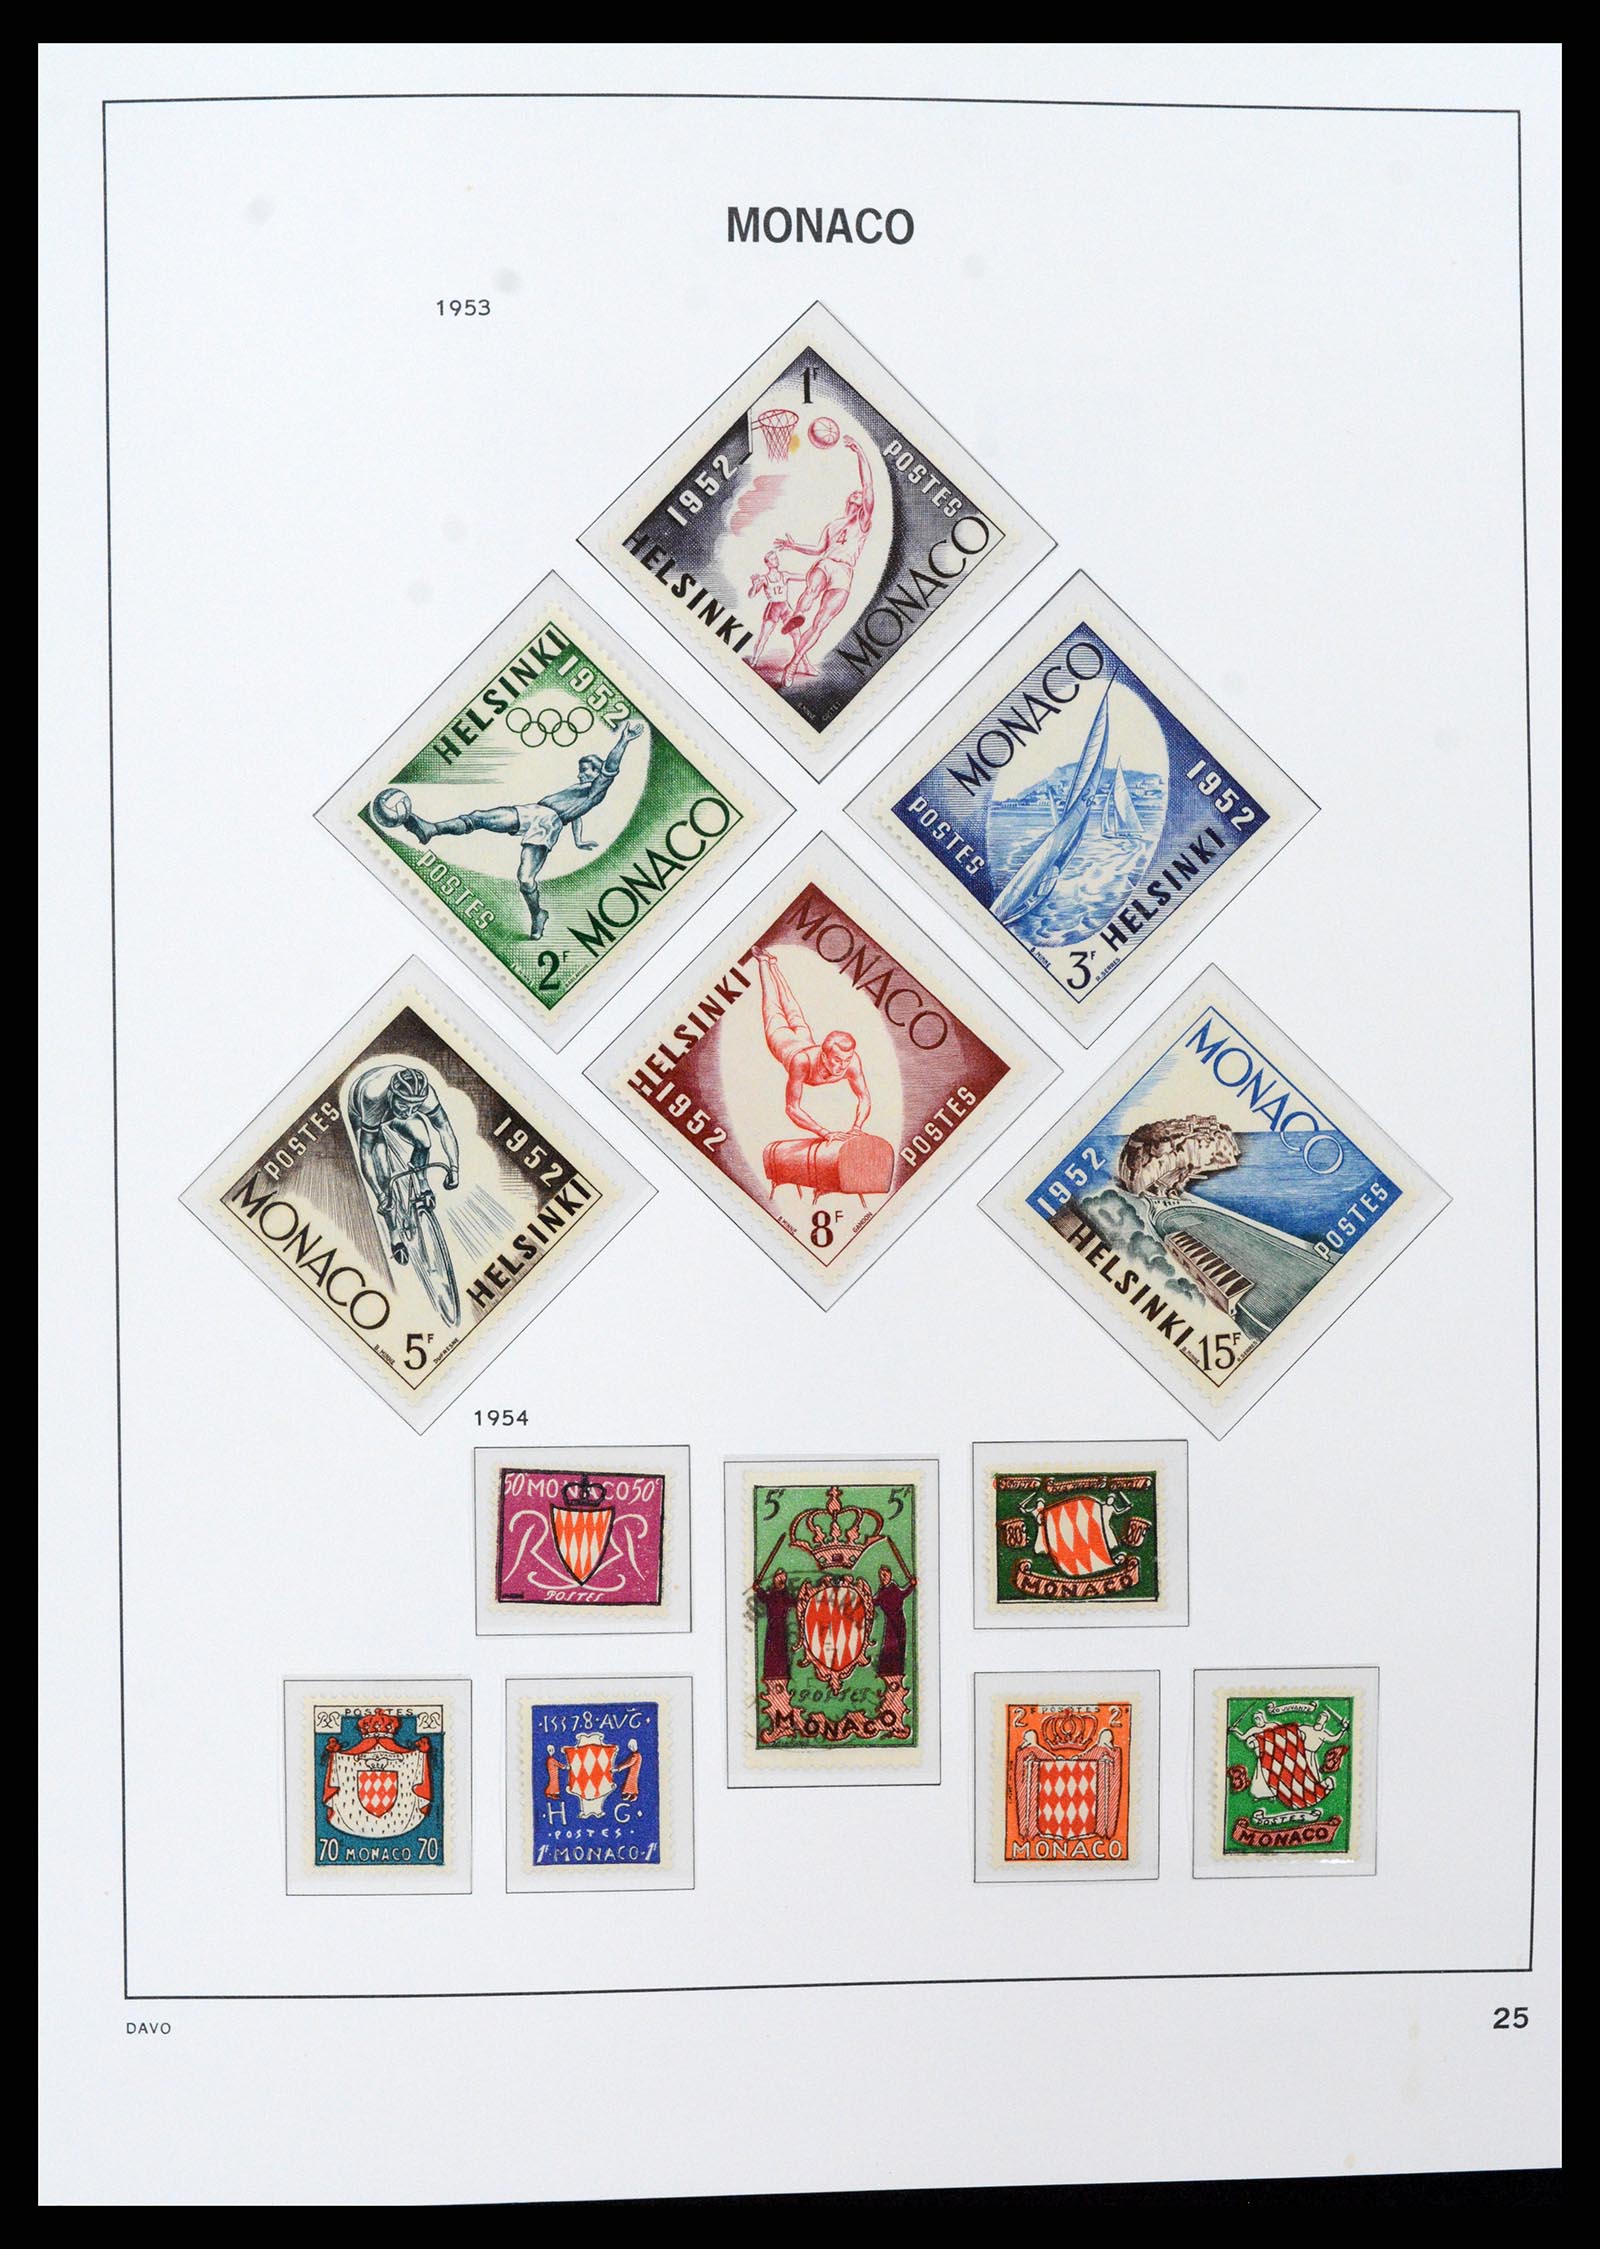 37279 025 - Stamp collection 37279 Monaco 1885-1969.